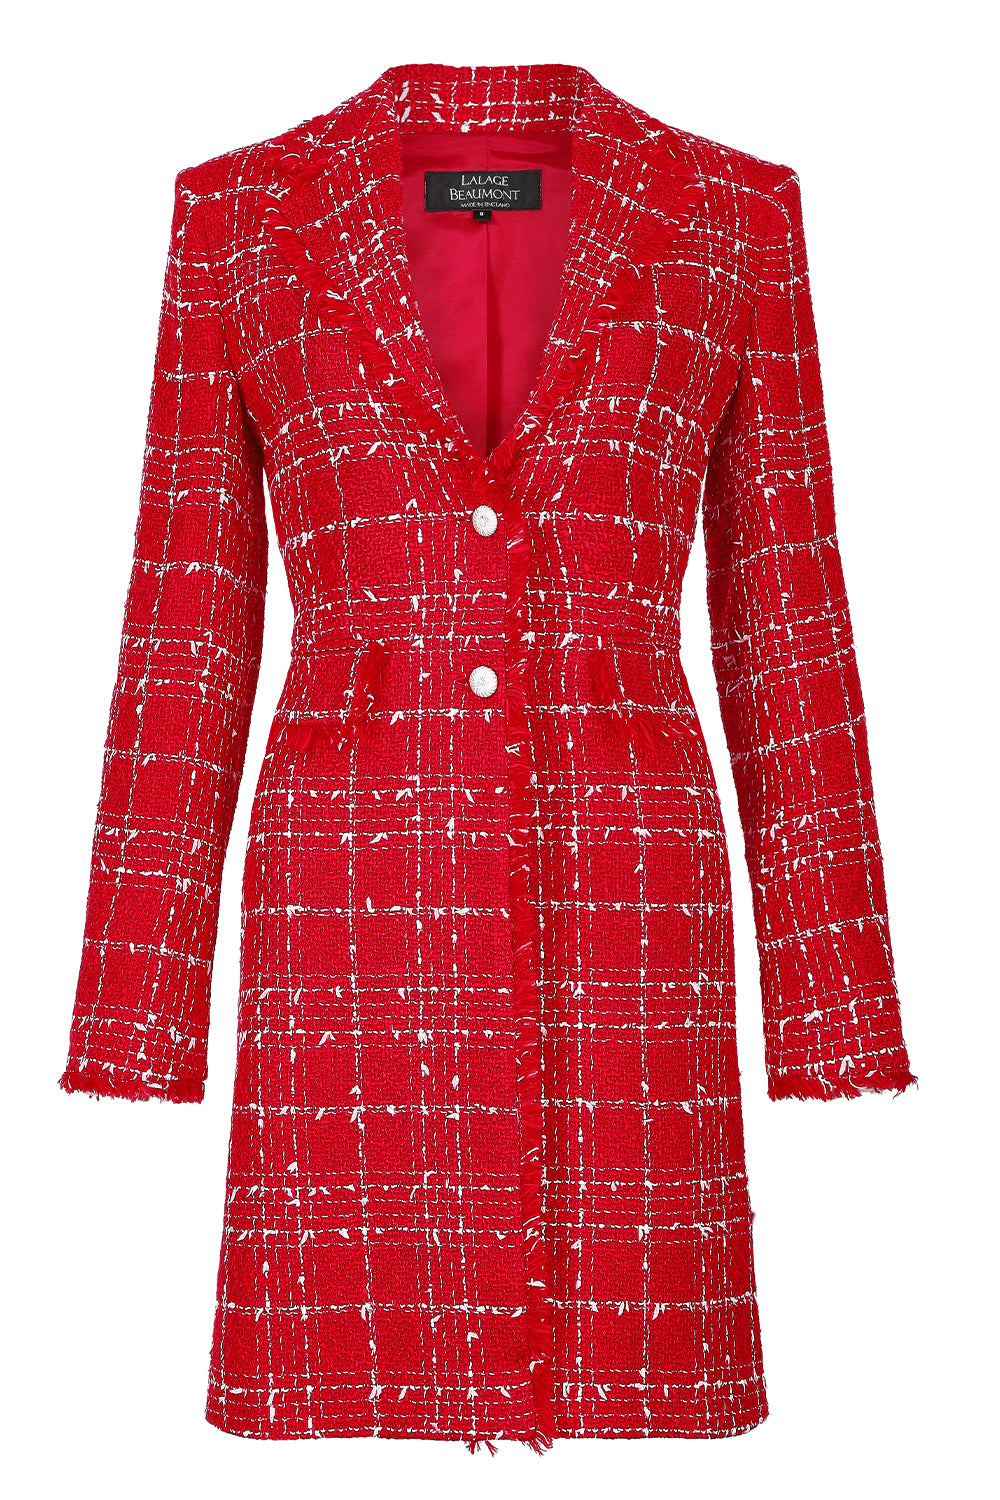 Red/White Check Tweed Jacket - Miranda